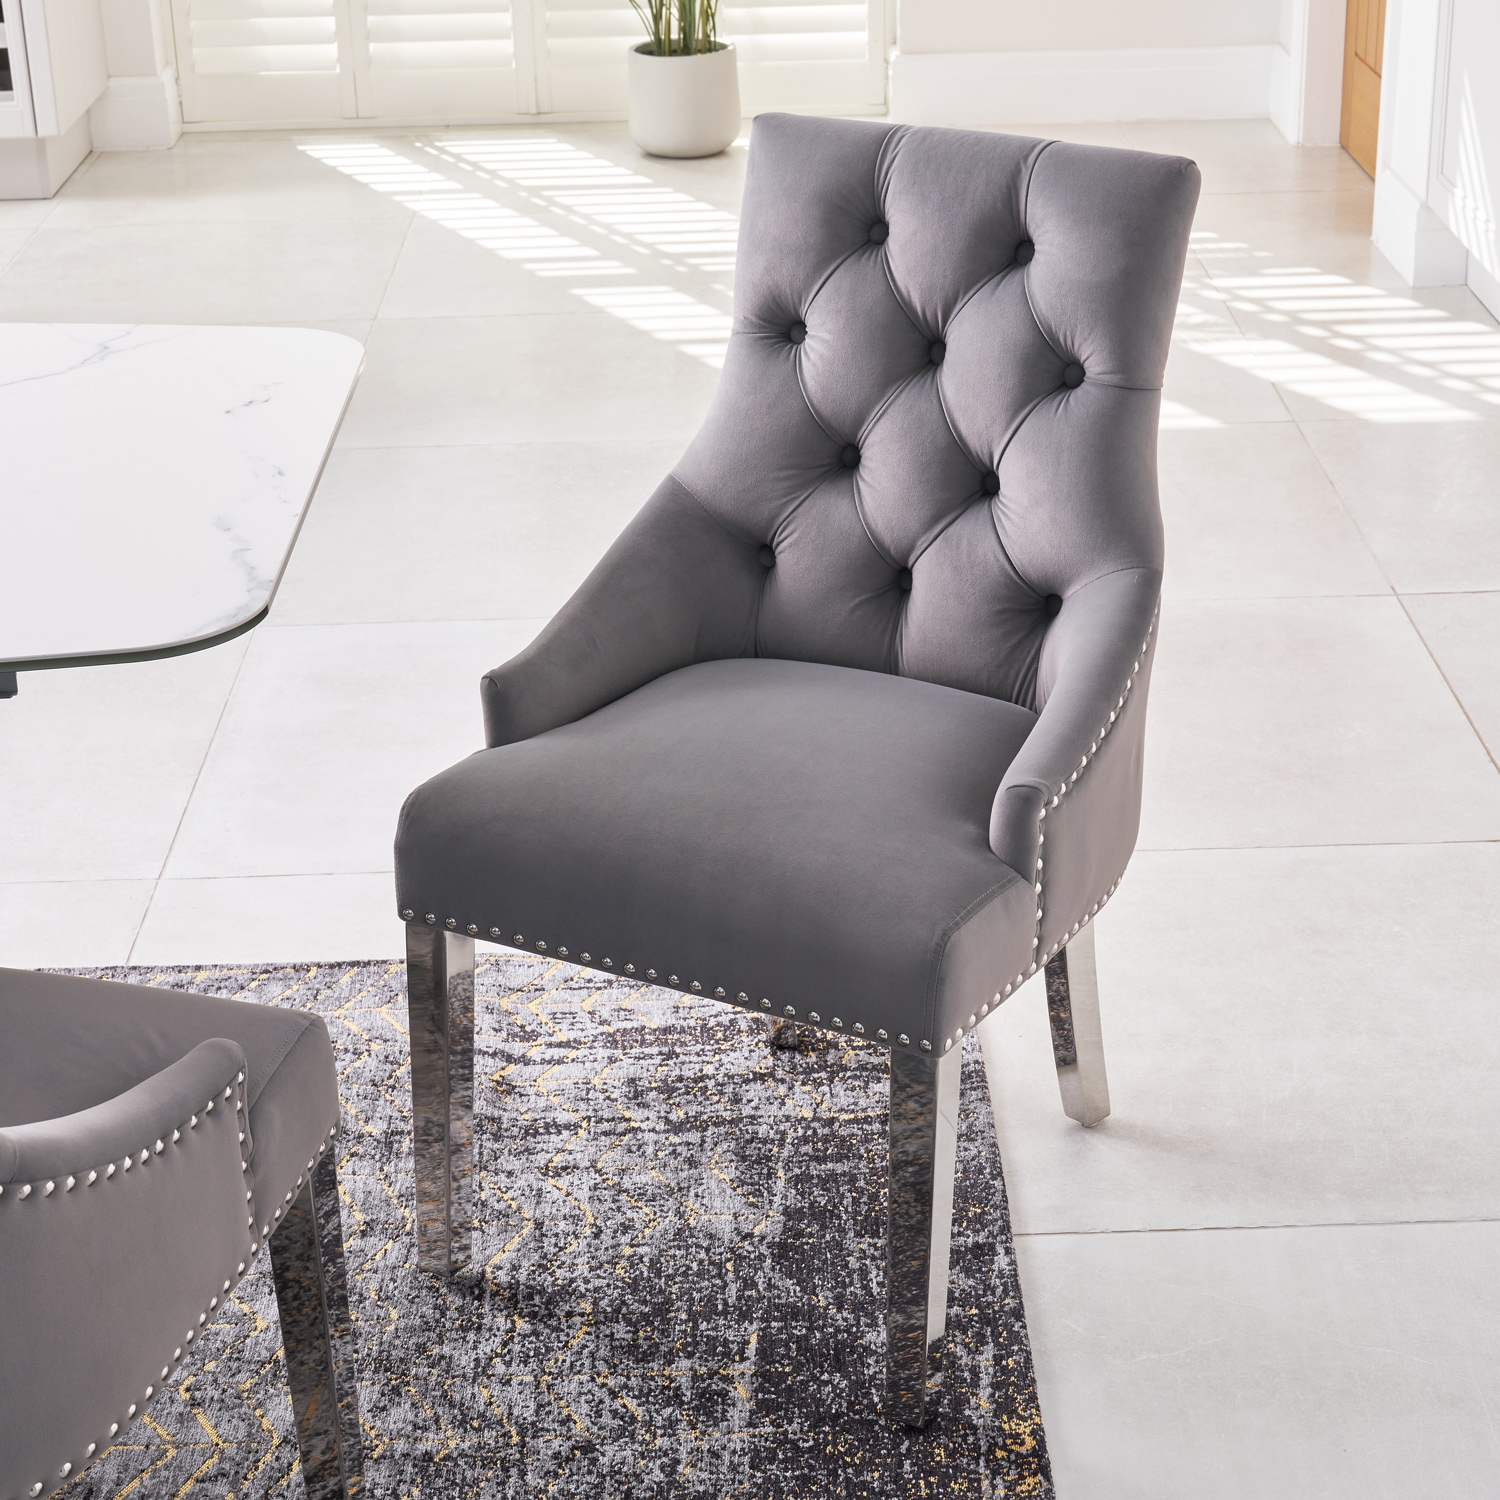 Chelsea Grey Brushed Velvet Scoop Back Dining Chair Silver Studs – Polished Steel Legs